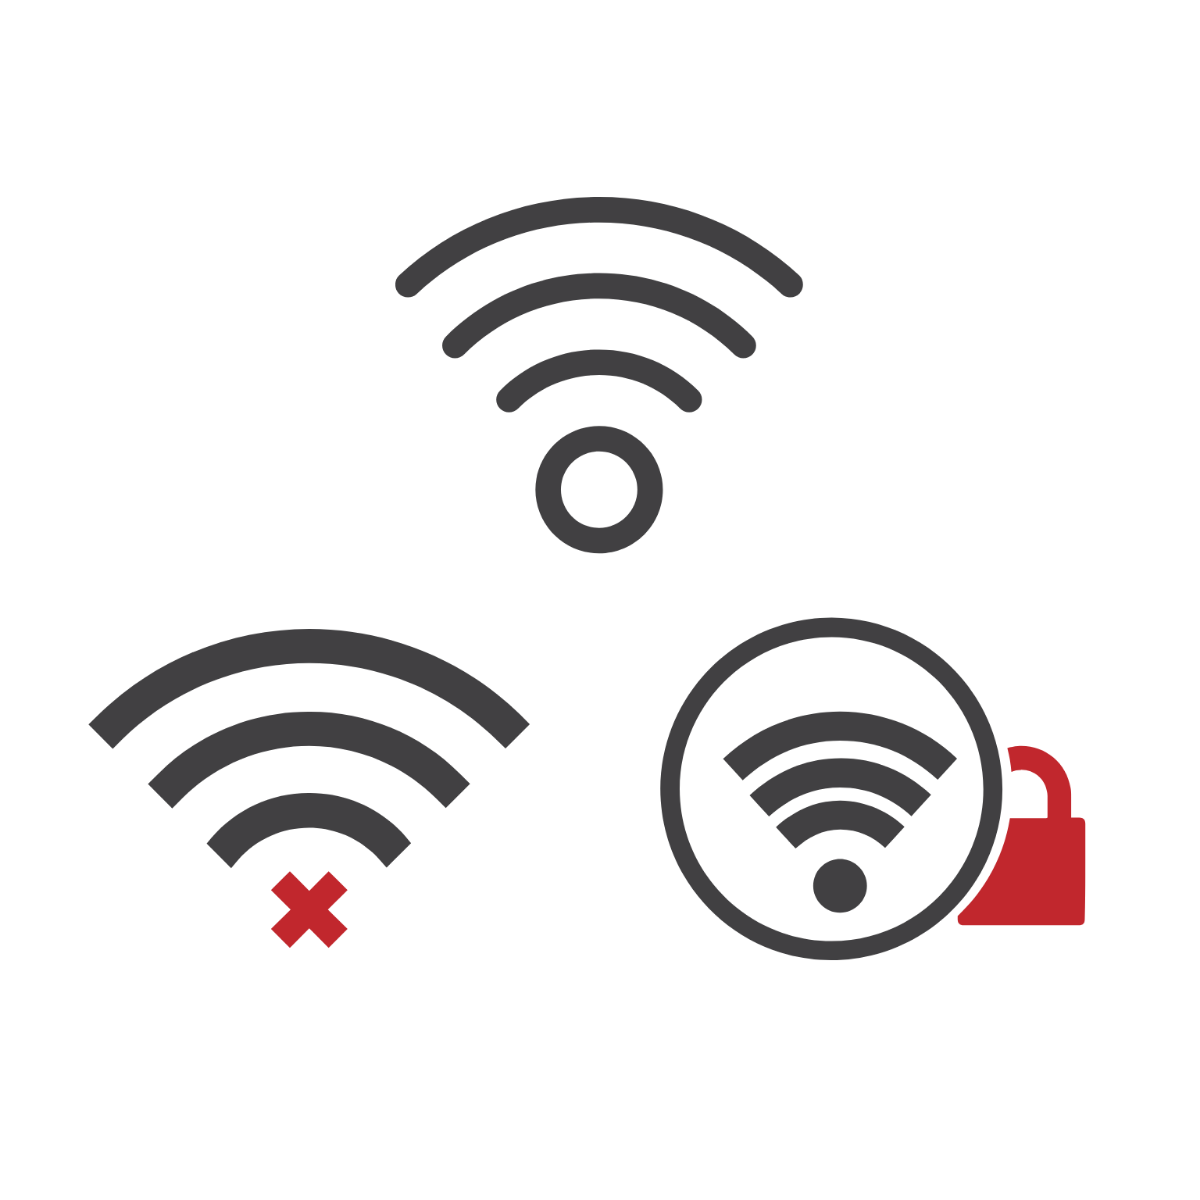 Wifi Symbol clipart Template